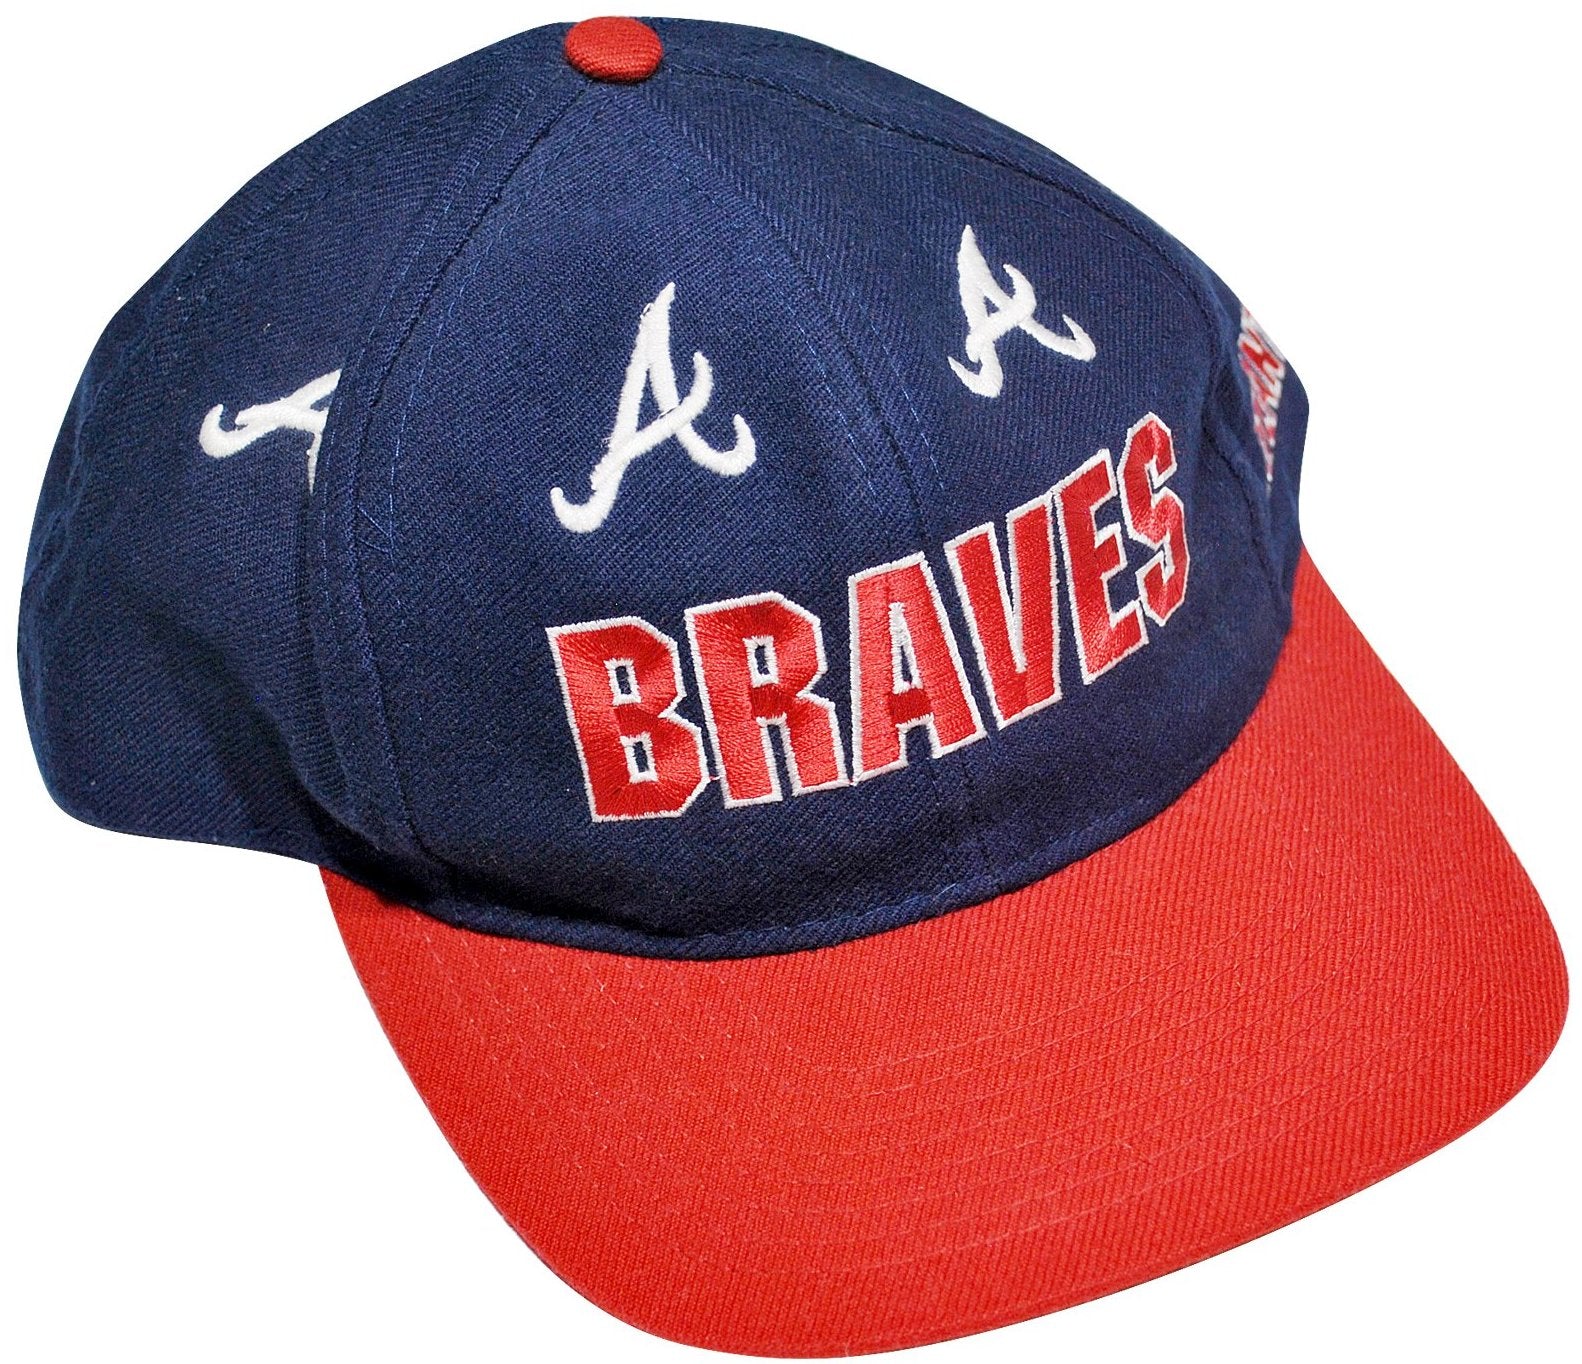 Vintage Atlanta Braves Snapback Hat